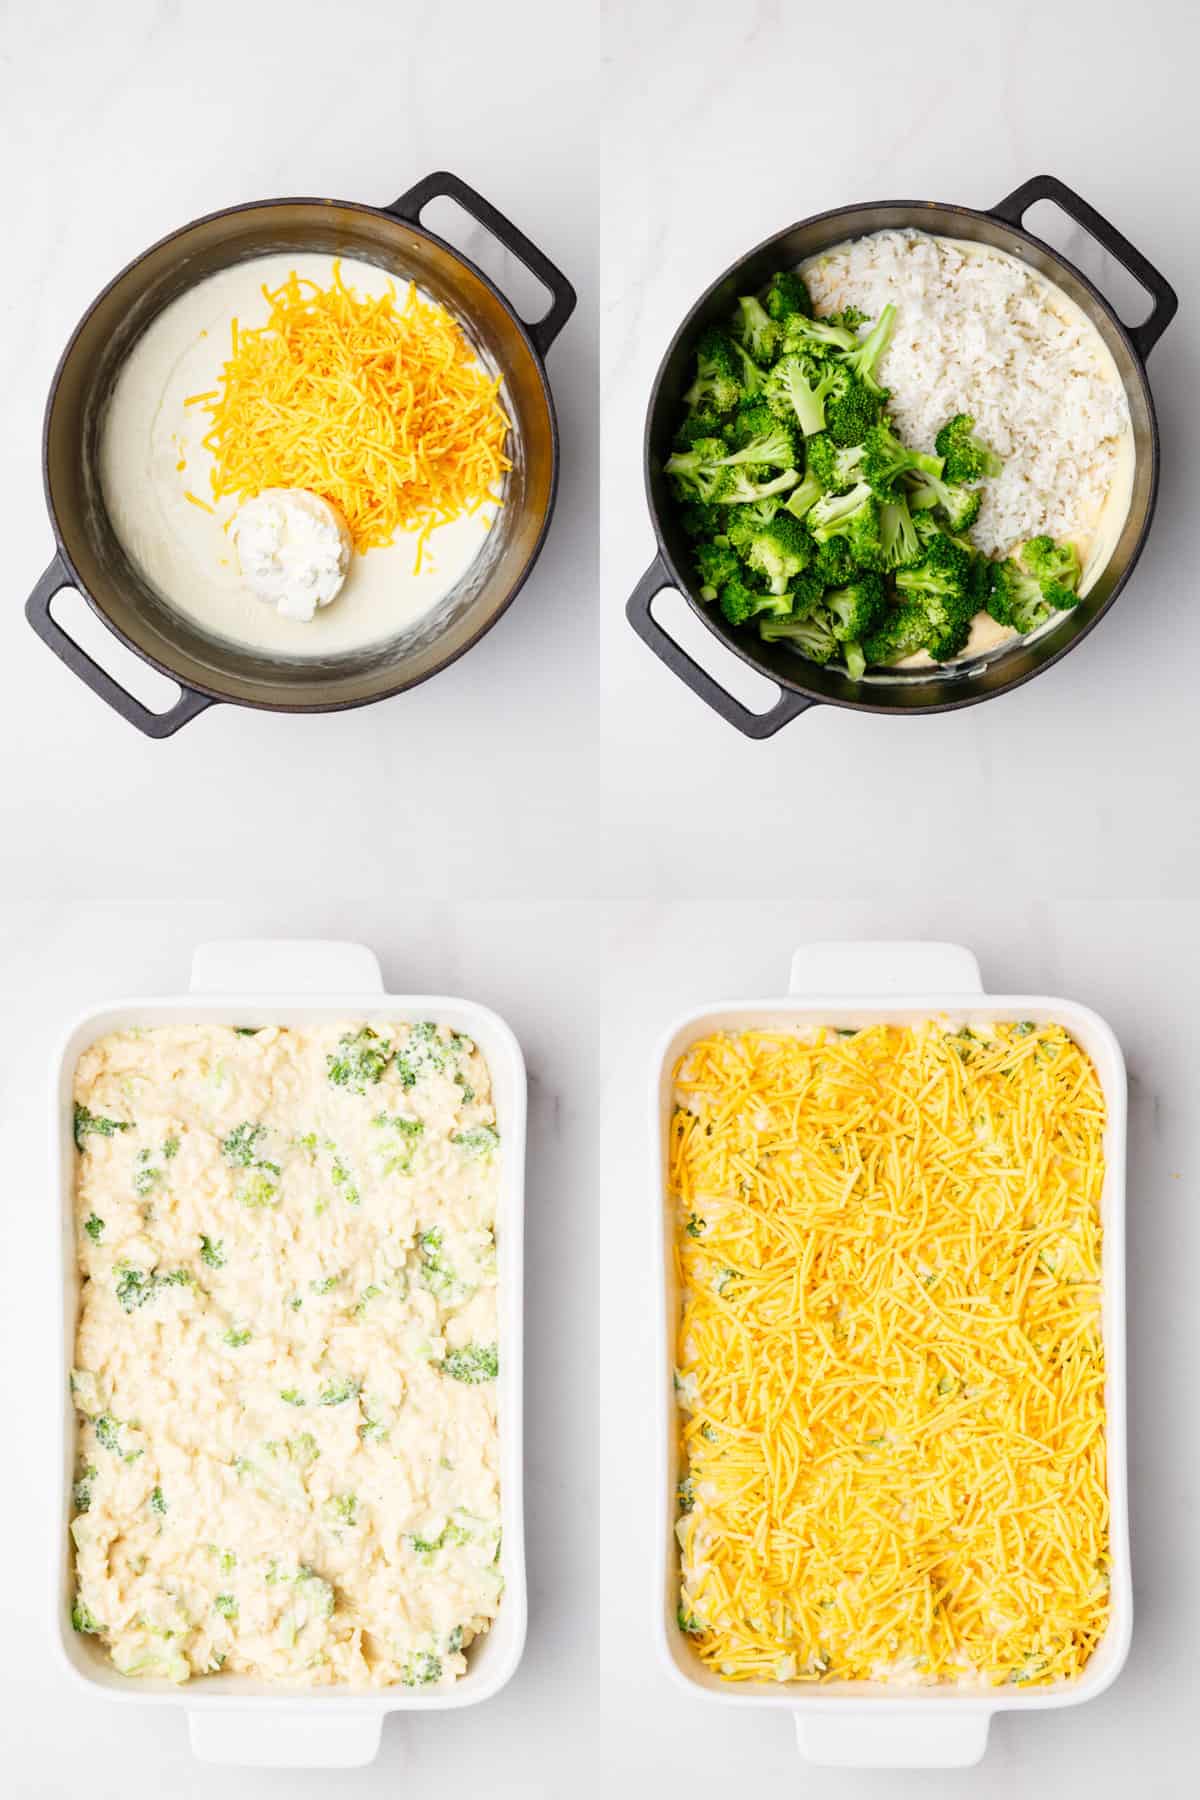 steps to make cheesy broccoli rice casserole.